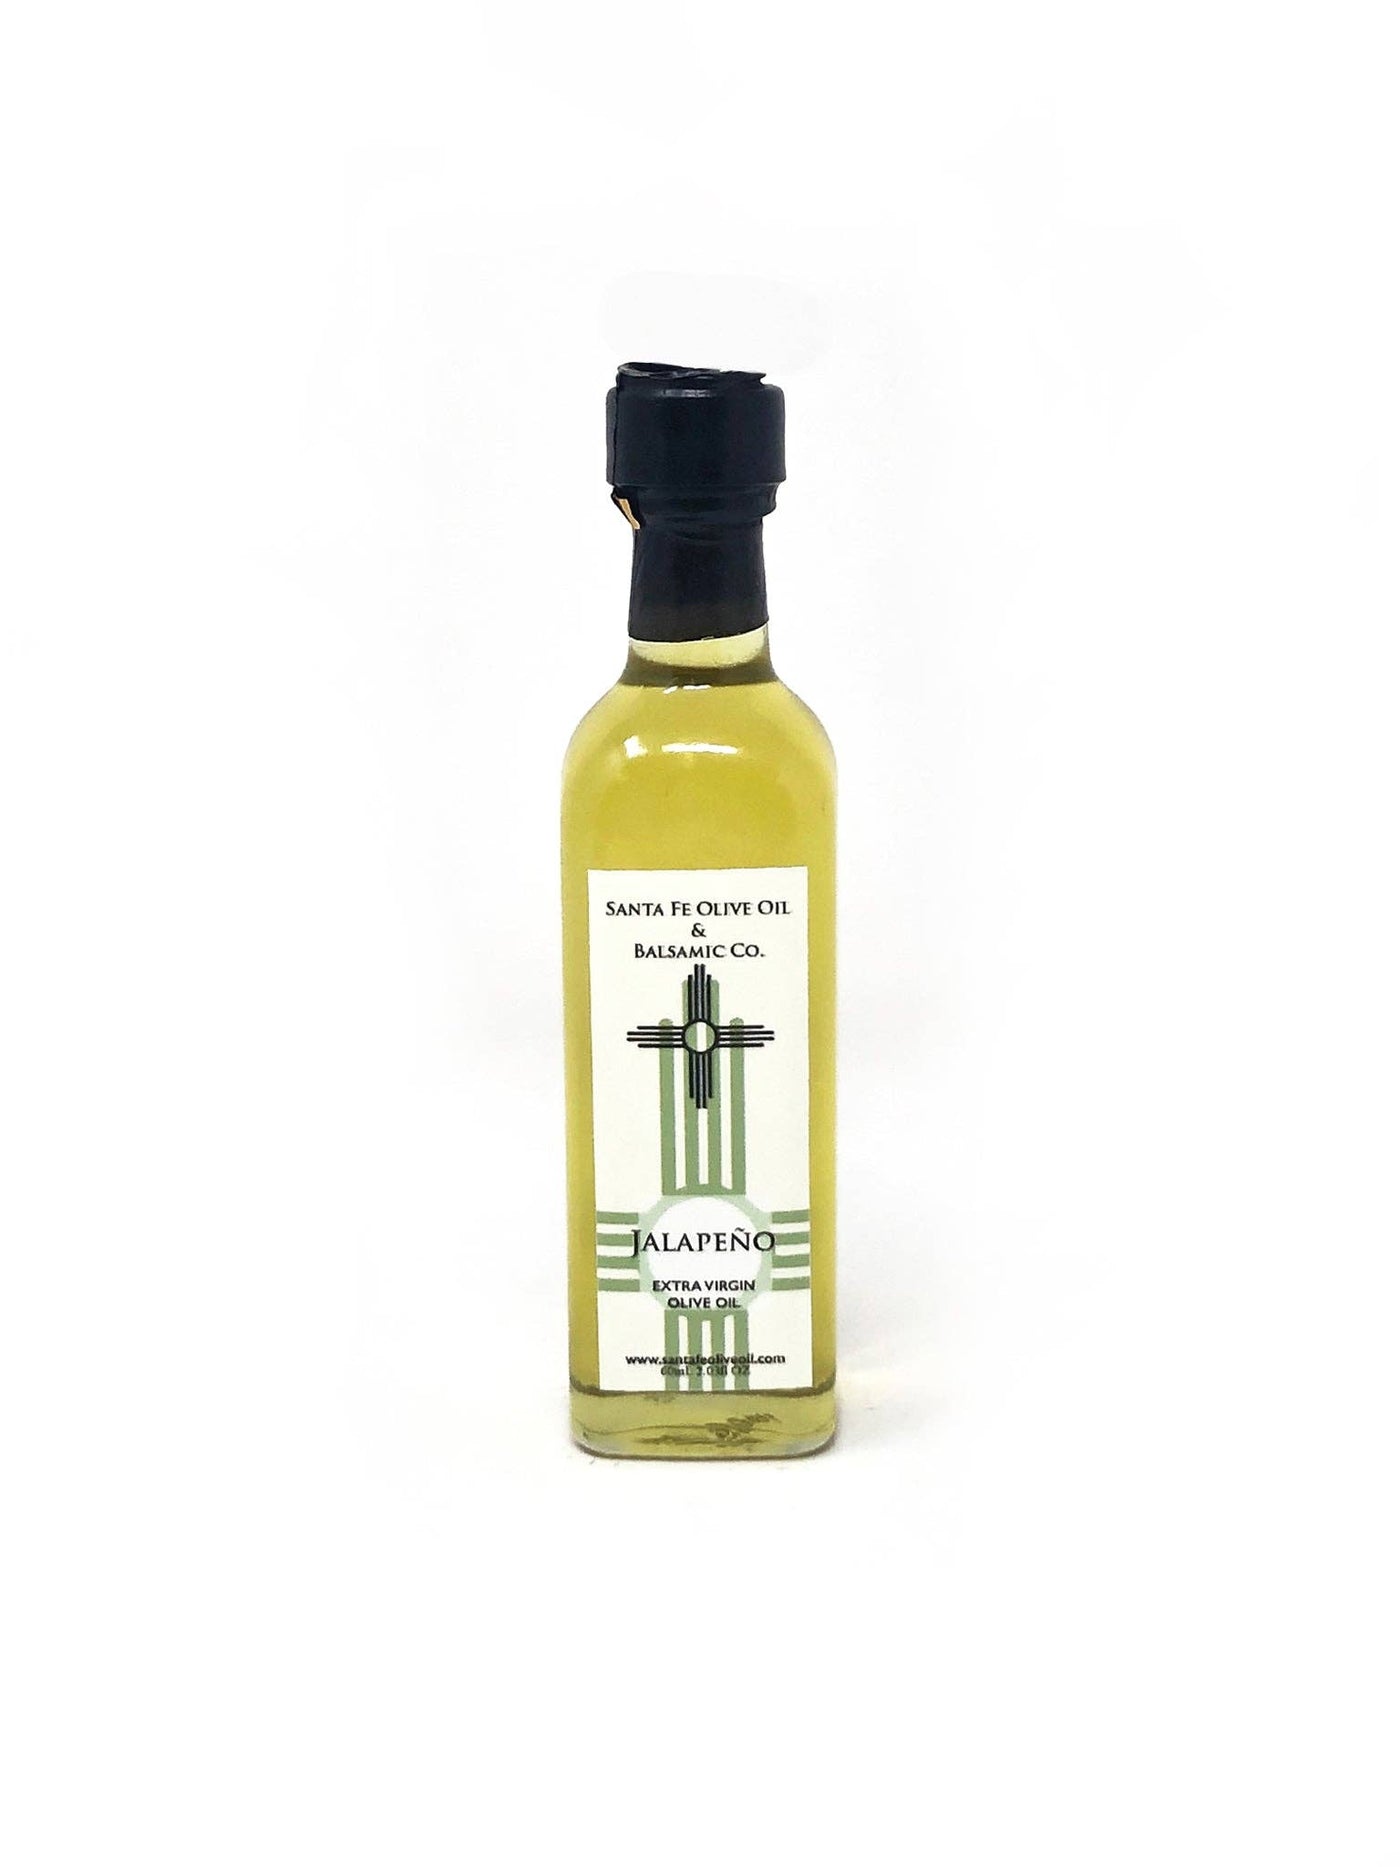 Jalapeño Olive Oil: 60ml | 2.03oz